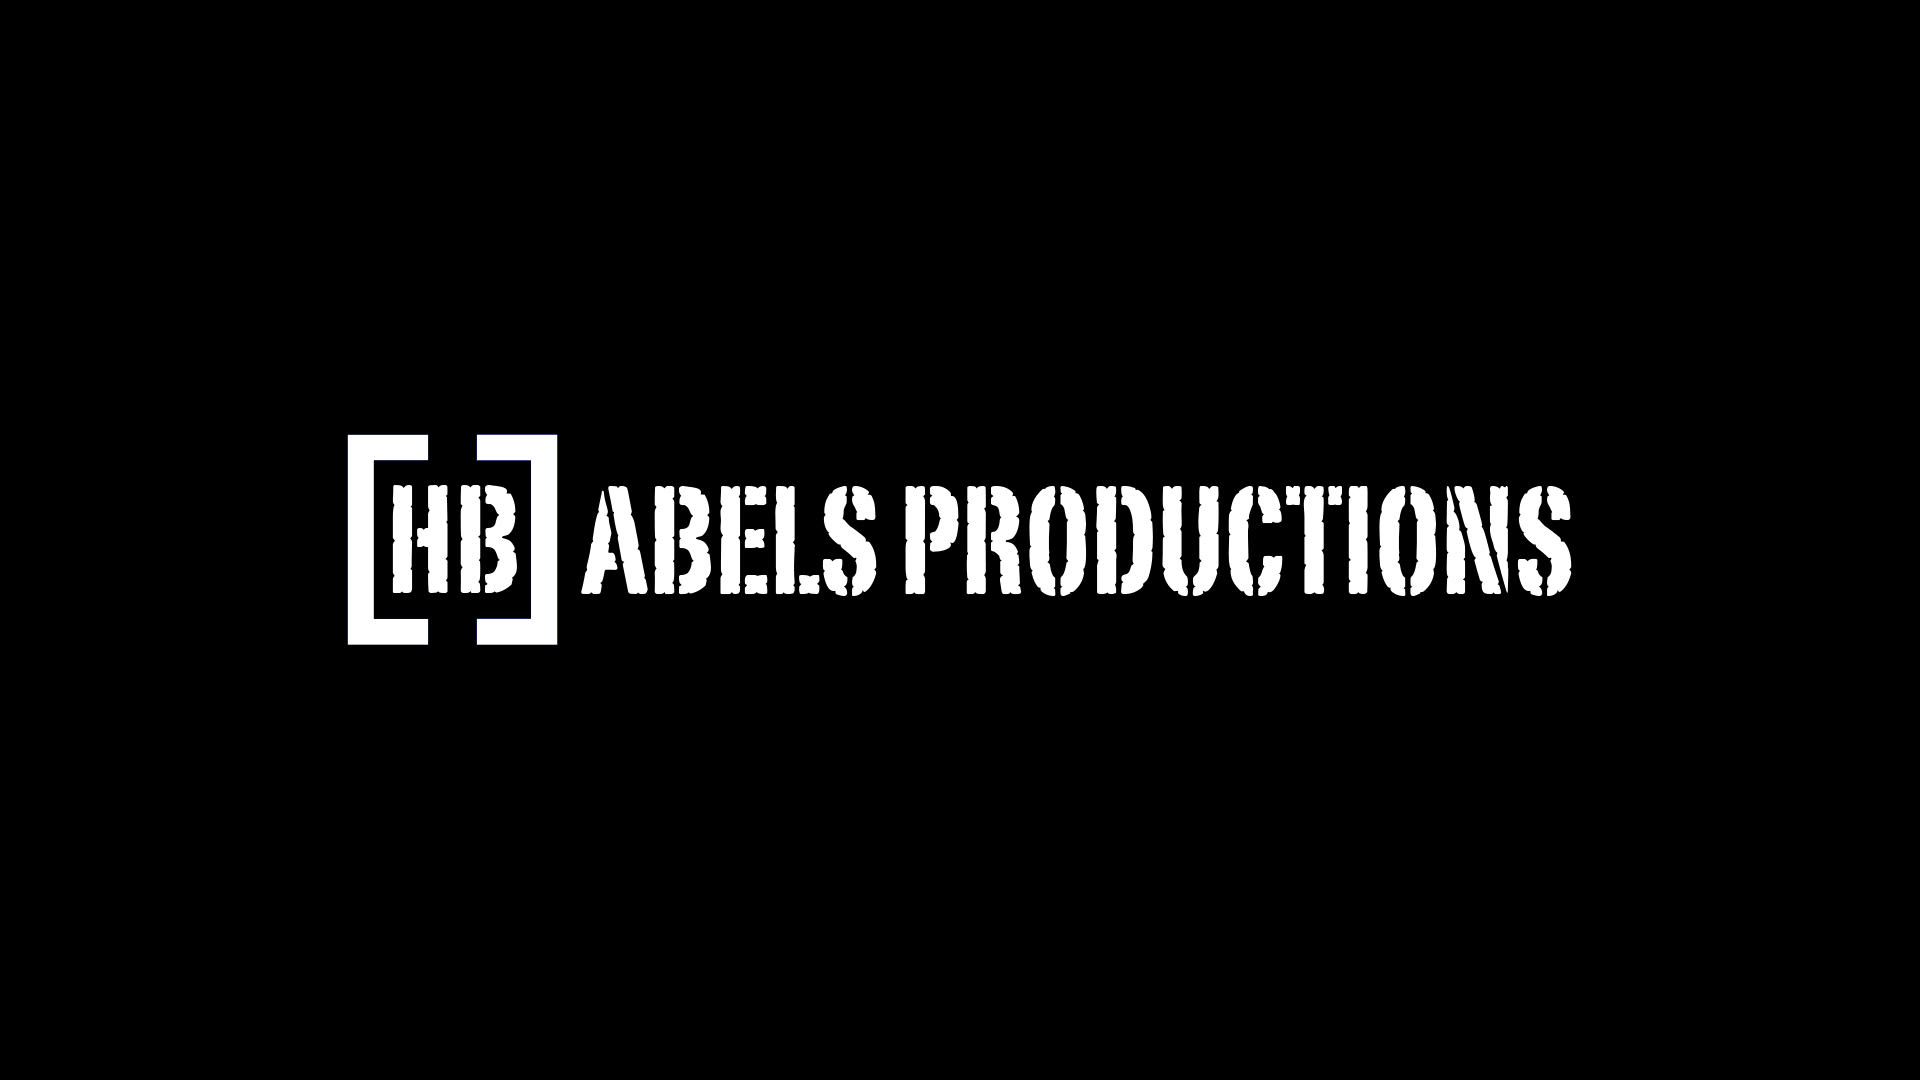 HB Abels Productions Header